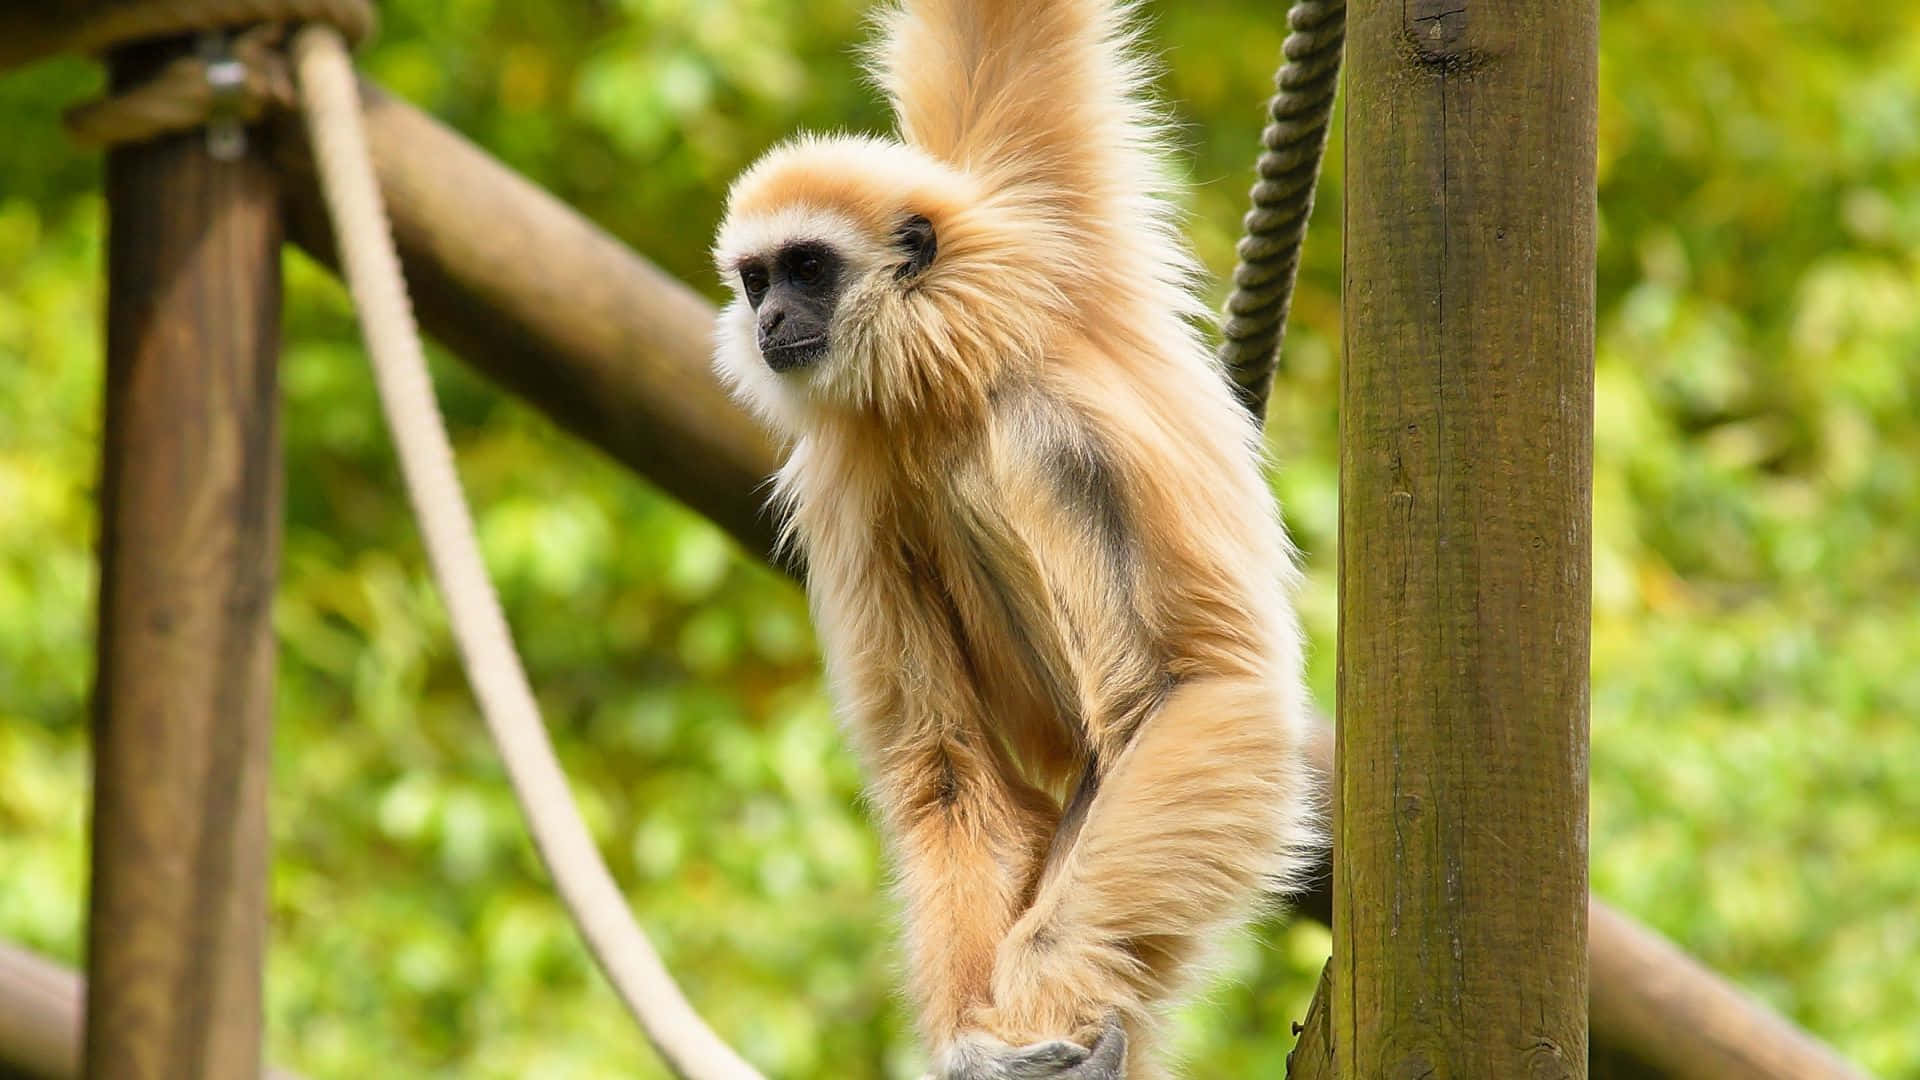 Majestic Hd Gibbon swinging between trees